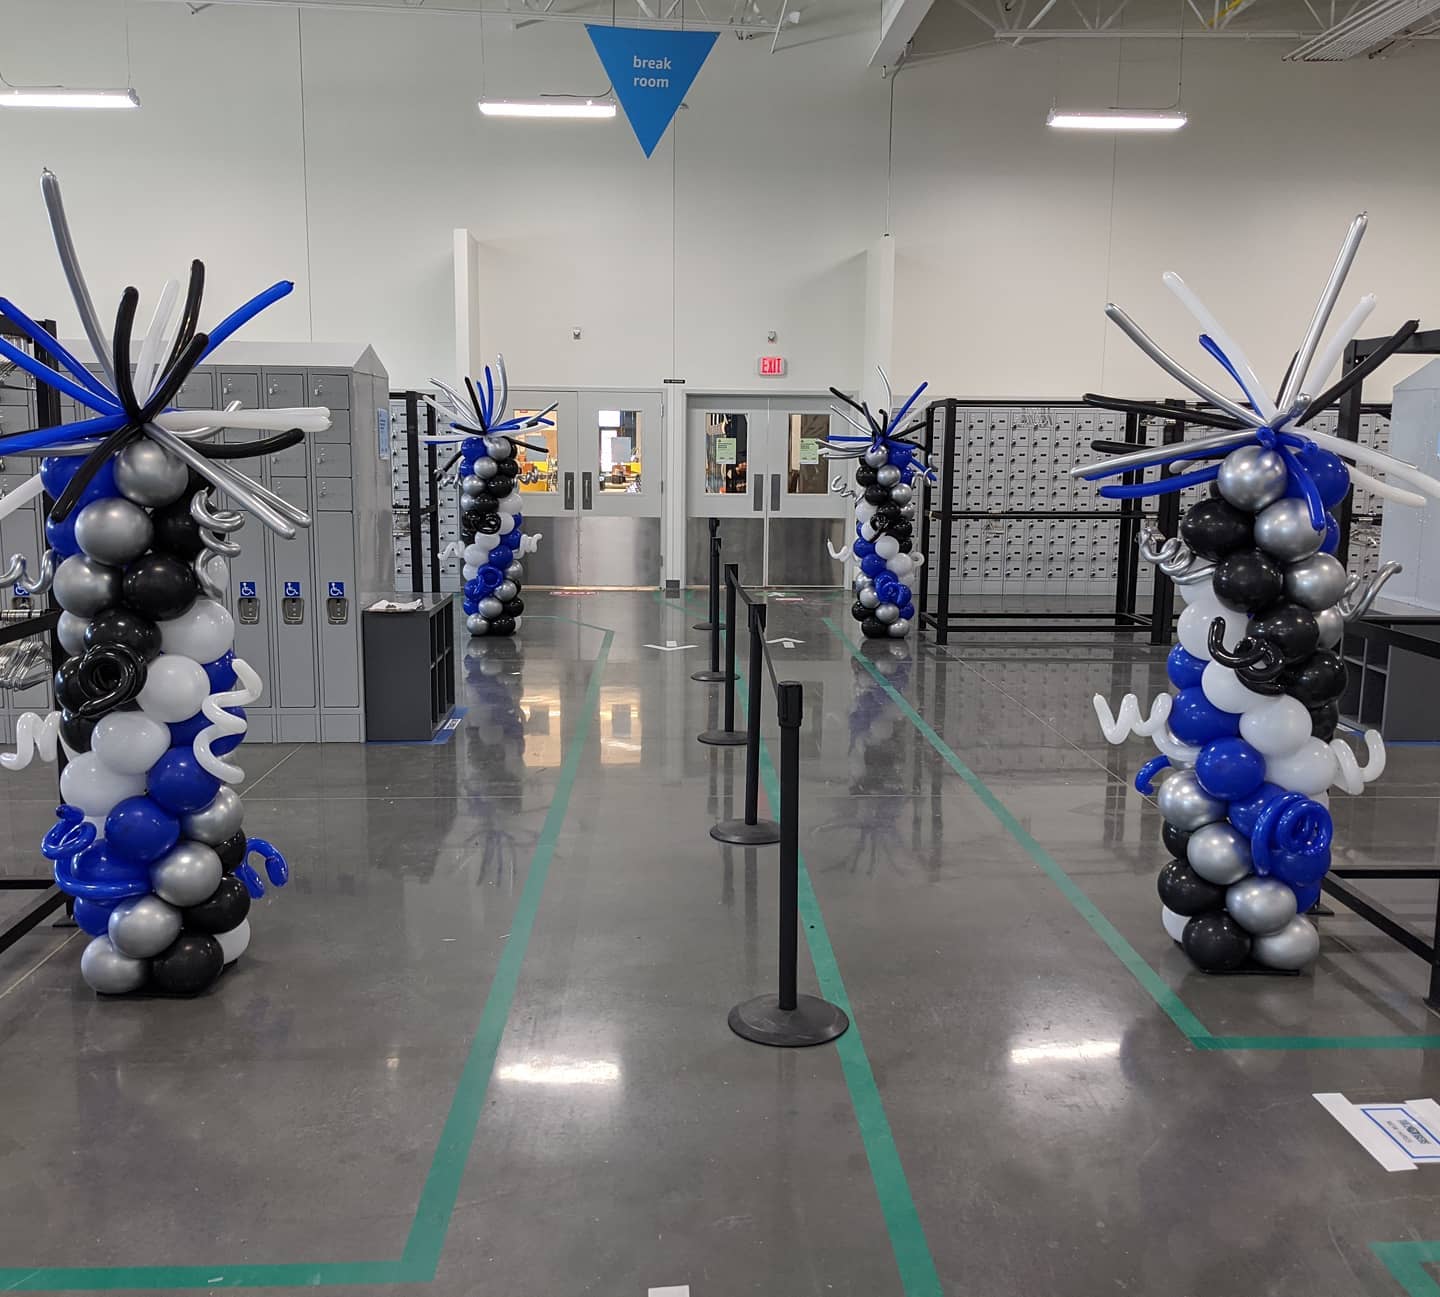 Balloon Sculpture for a Corporate Event at Amazon's new fulfillment center in Tulsa, Oklahoma